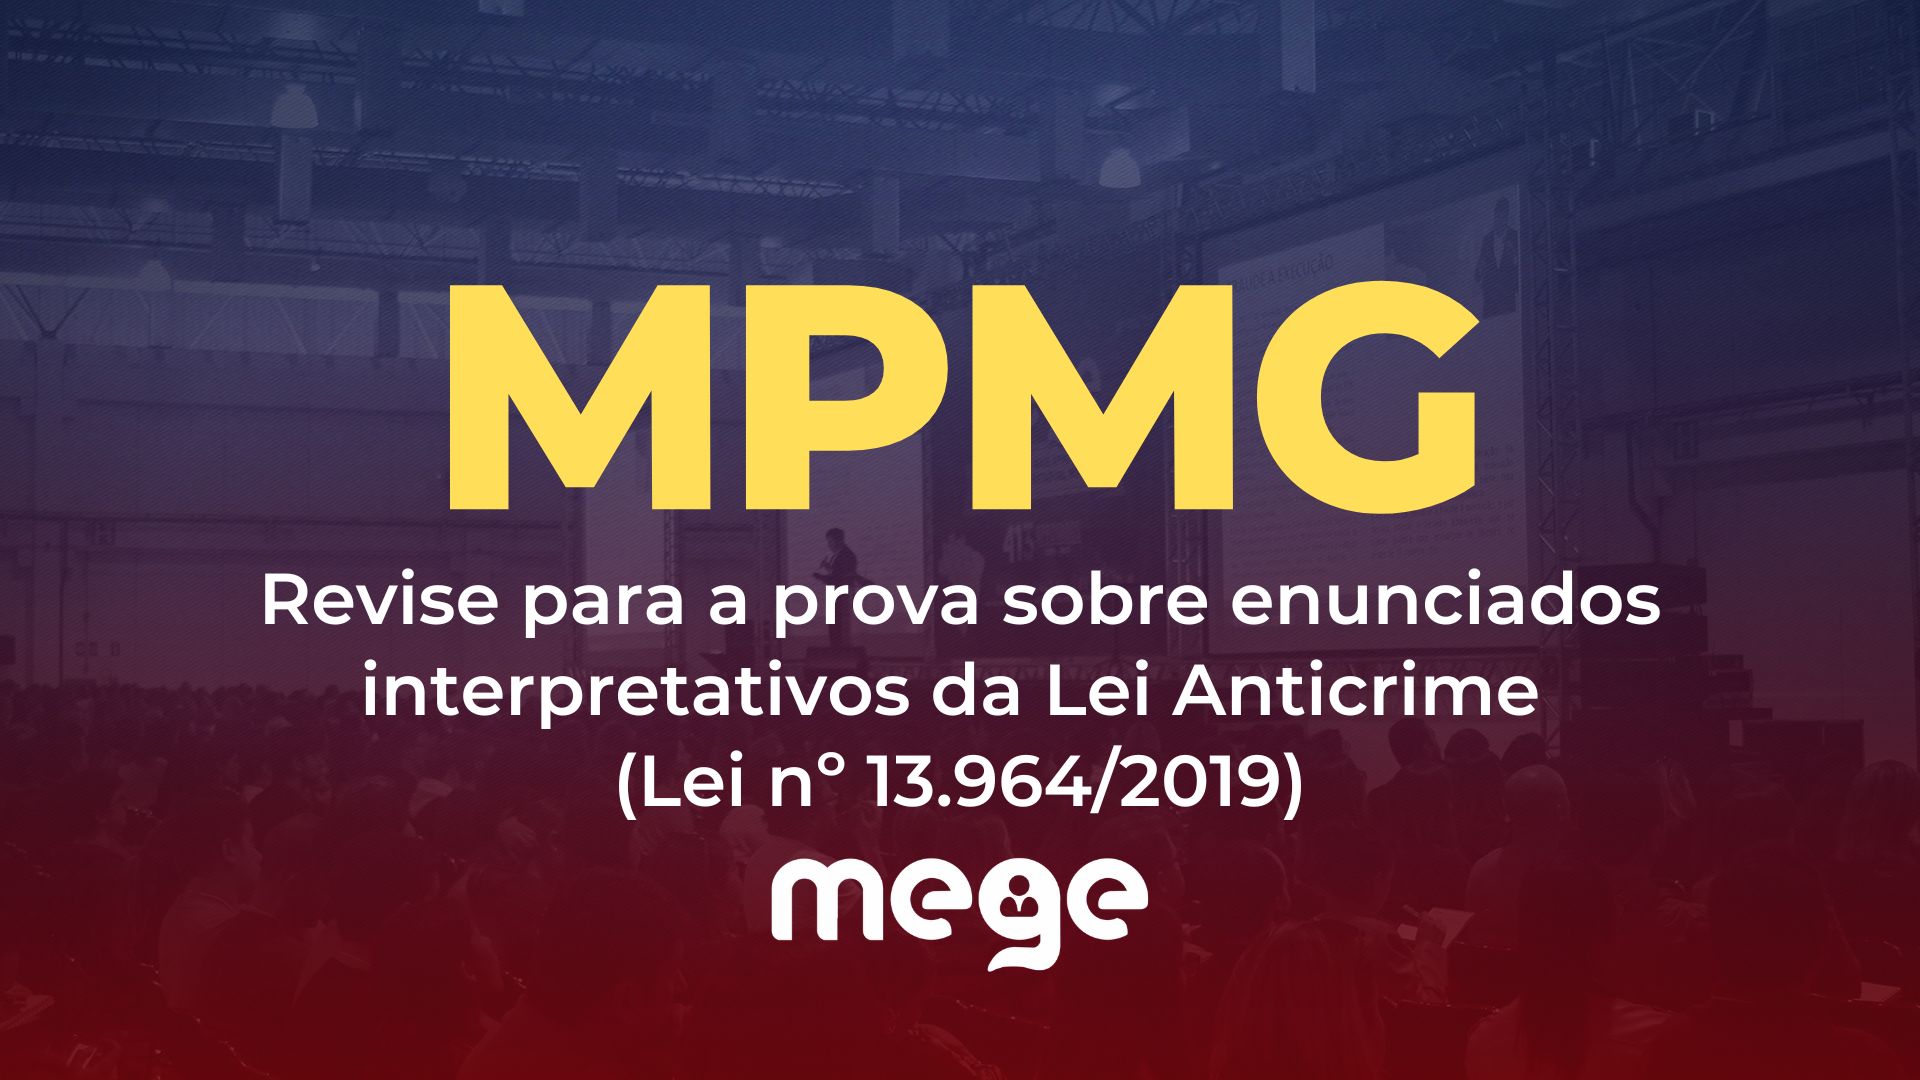 MPMG 2022: revise para a prova sobre enunciados interpretativos da Lei Anticrime (Lei nº 13.964/2019)